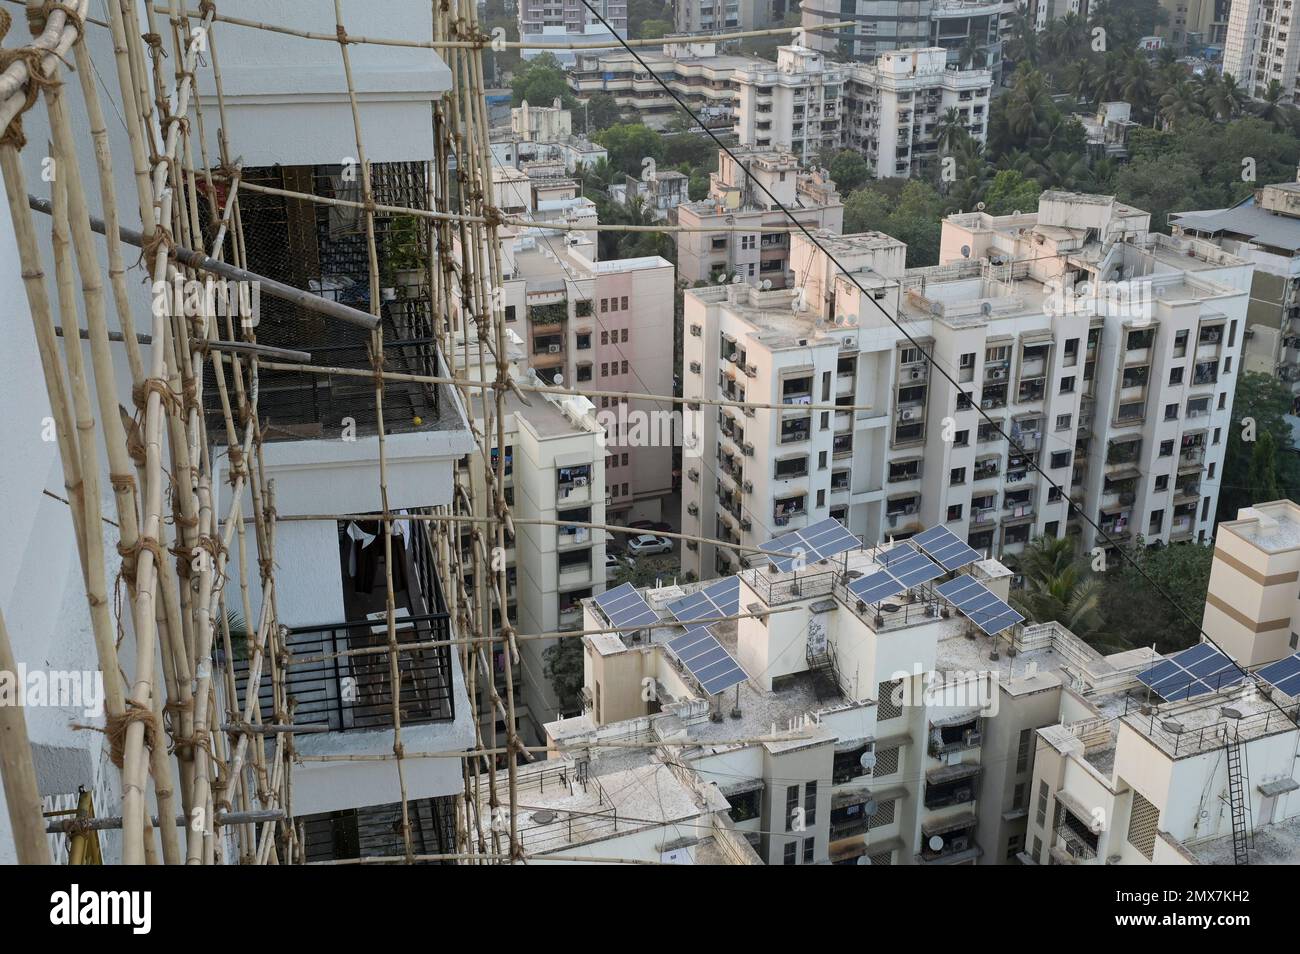 INDIA, Mumbai, apartment tower under renovation, bamboo scaffold, solar panel on roof / INDIEN, Mumbai, Wohnhaus mit Baugerüst aus Bambus, Solar Module auf Dach Stock Photo